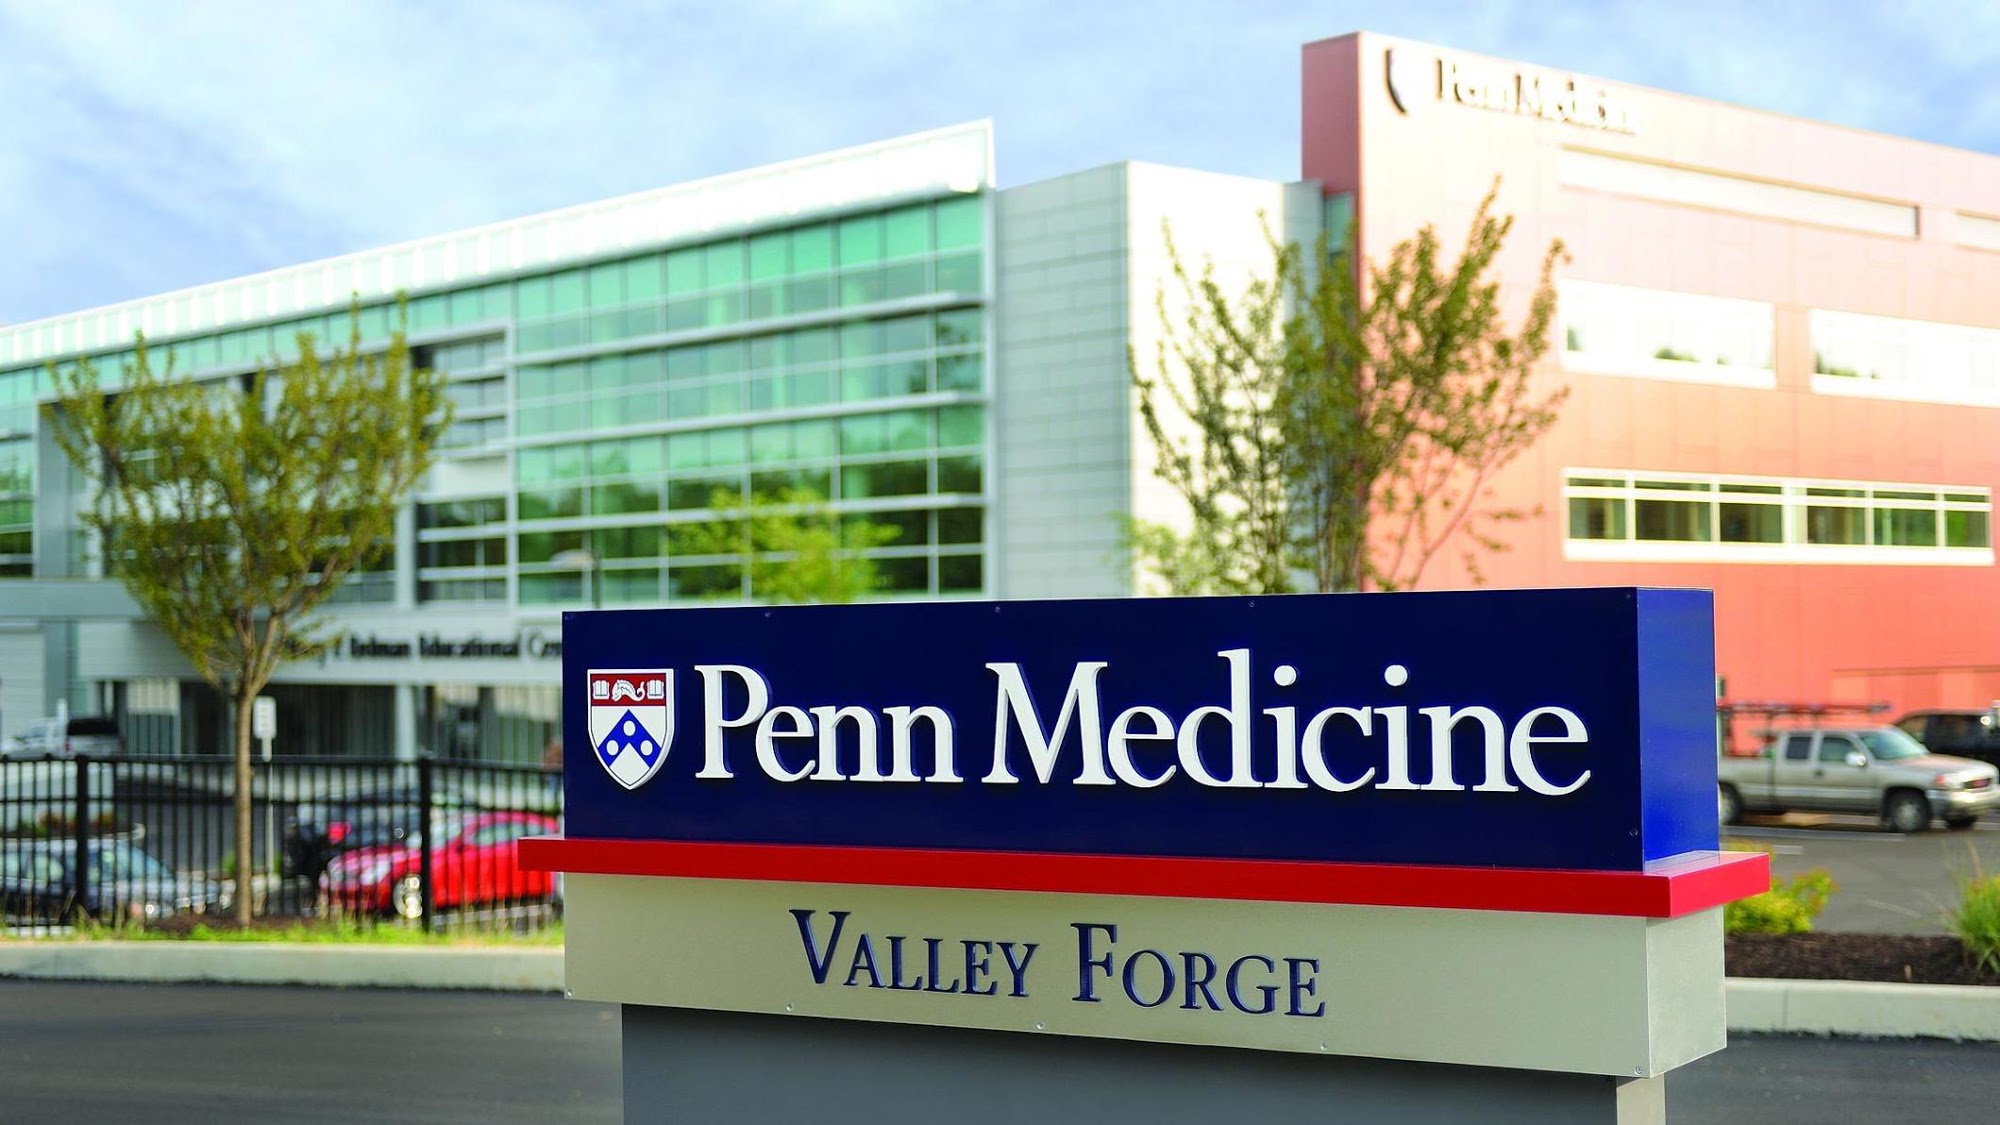 Penn Medicine Valley Forge